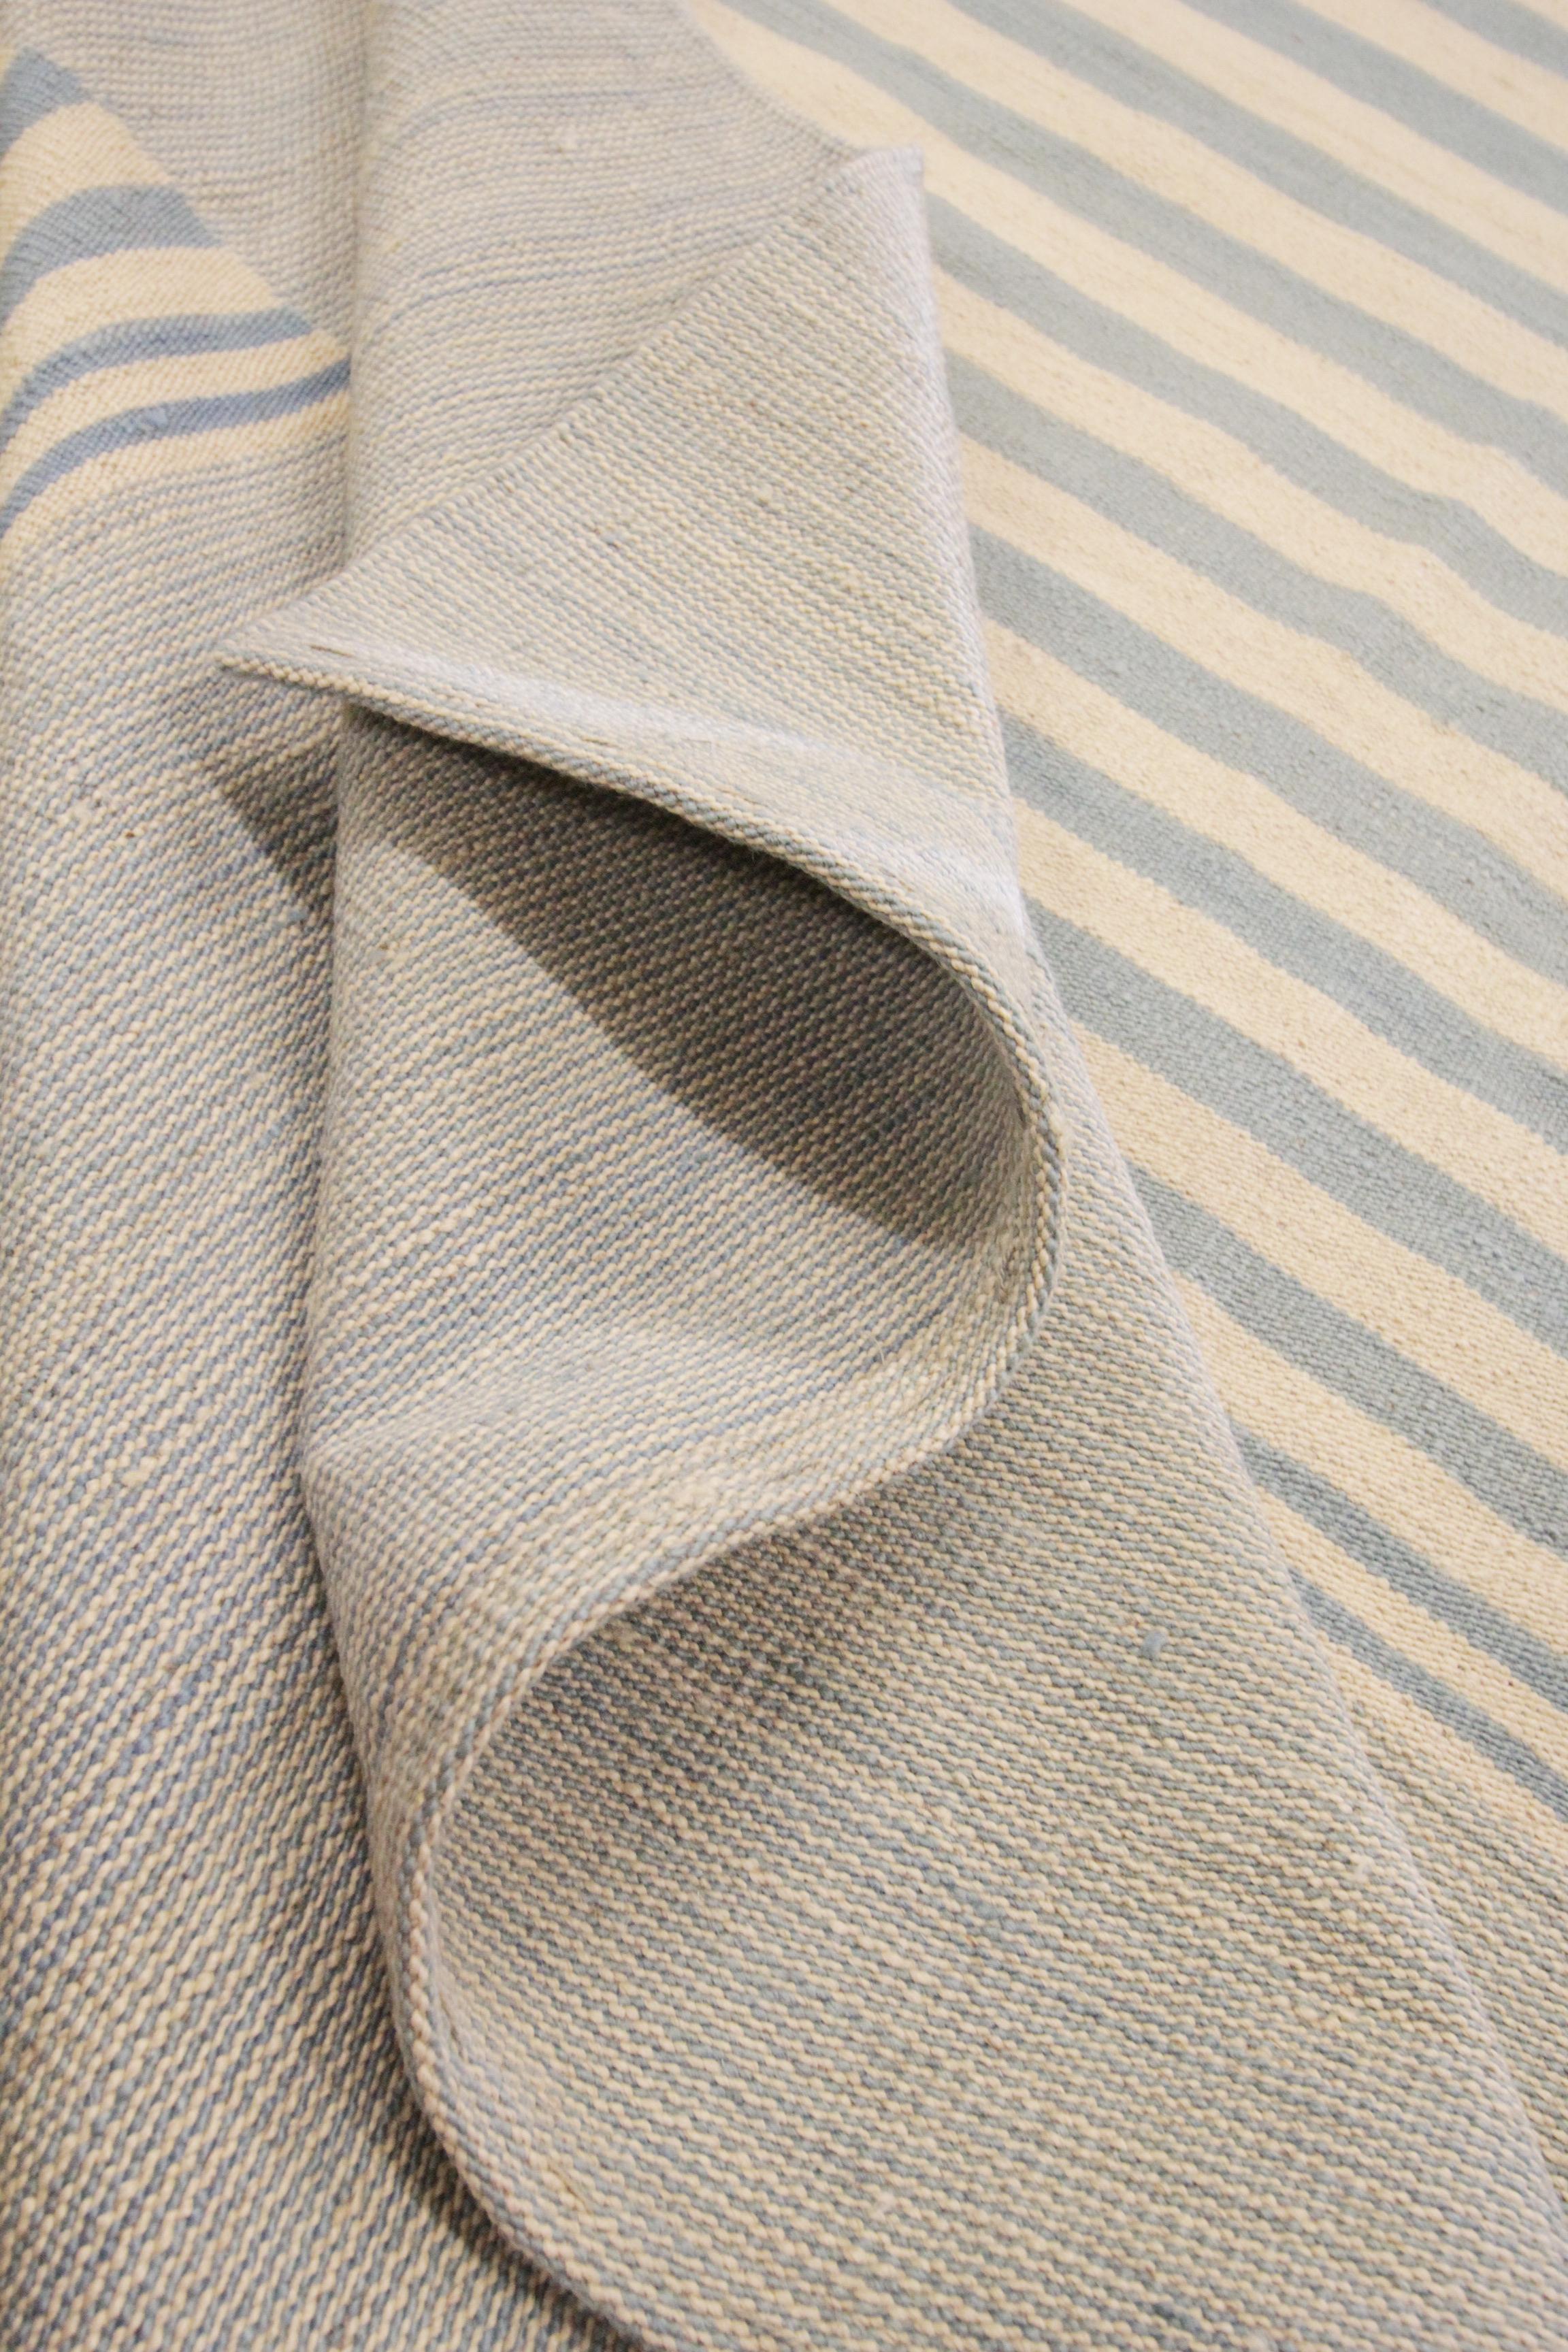 Modern Striped Kilim Rug Handmade Carpet Blue Cream Wool Flat Area Rug For Sale 3